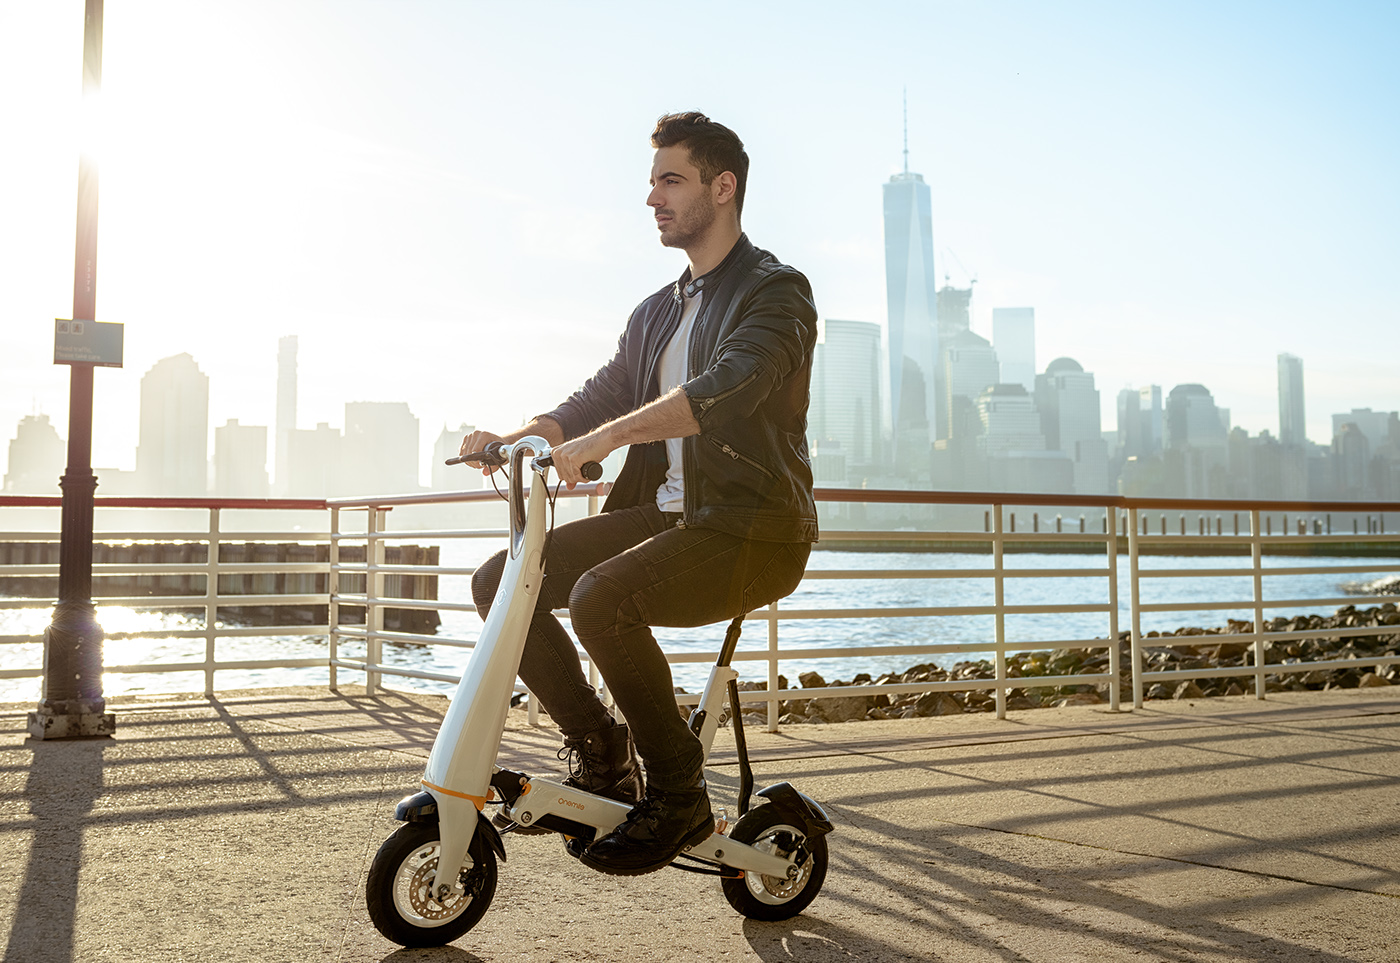 Smart Bike advertisement Technology future lifestyle ride Citylife small bycicle